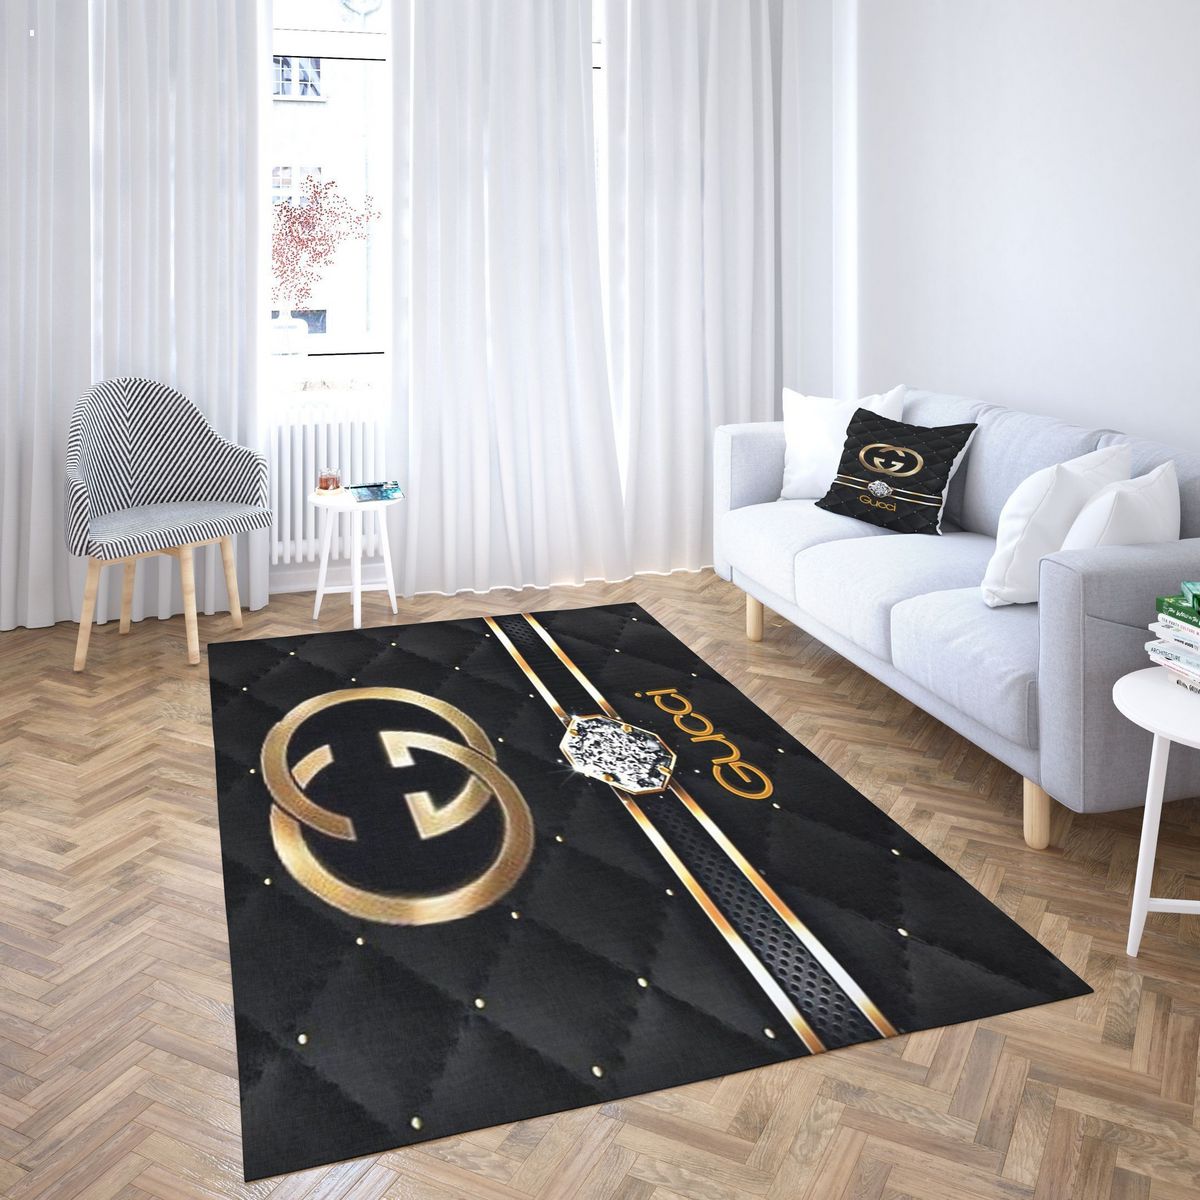 Gucci Diamond Luxury Brand Carpet Rug Limited Edition